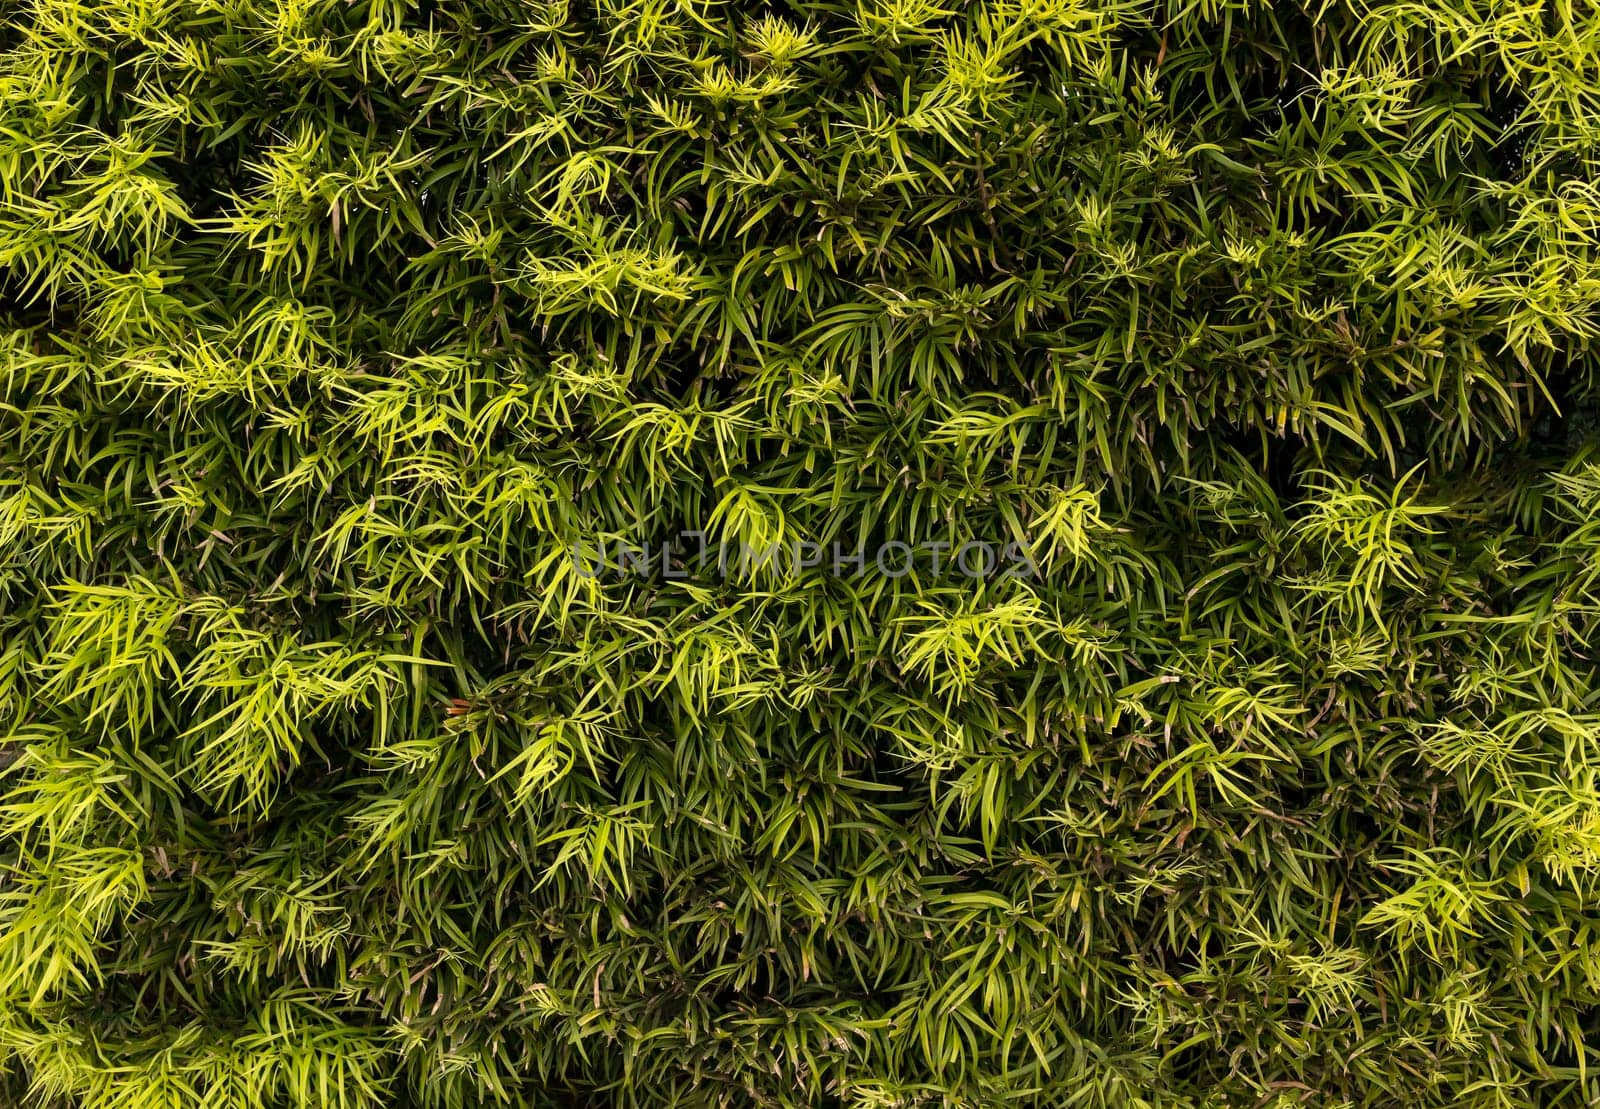 Bright Bamboo Green Leaves Background, Texture. Fresh Summer Natural Wallpaper. Horizontal Plane. Decorative Wall by netatsi